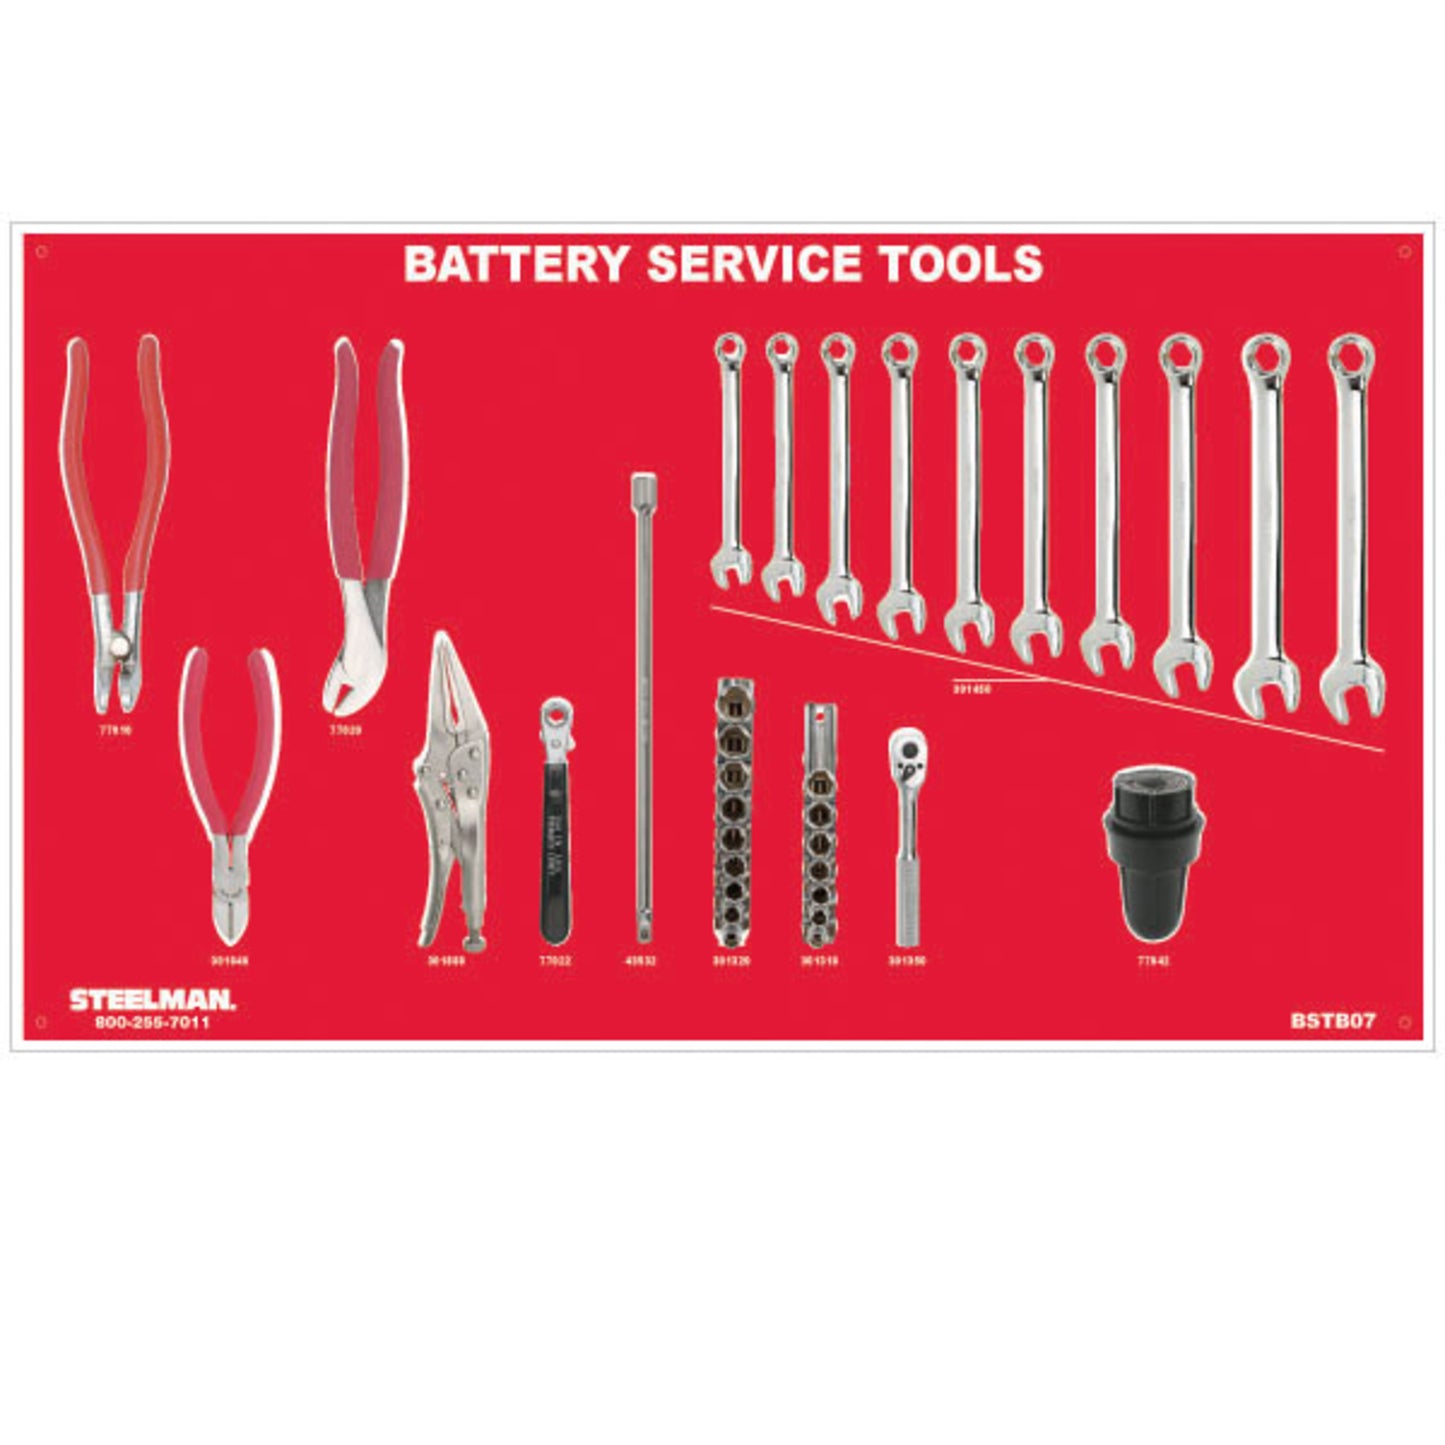 Battery Service Tool Board